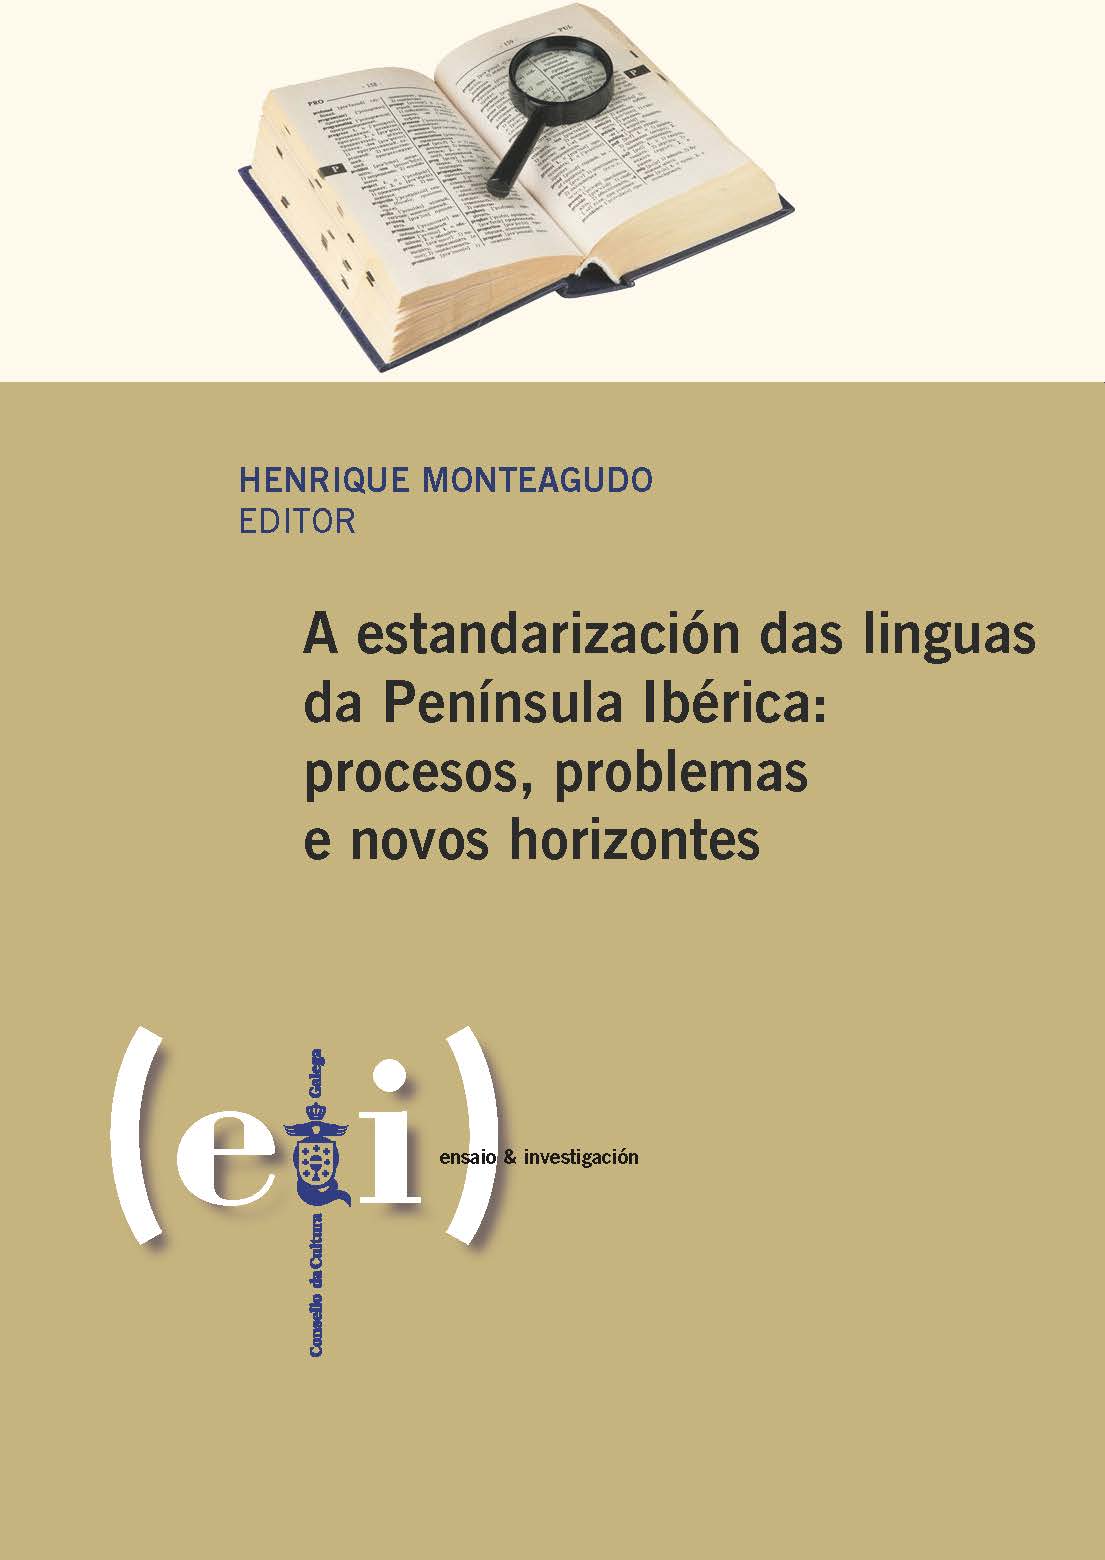 Imagen de portada del libro A estandarización das linguas da Península Ibérica